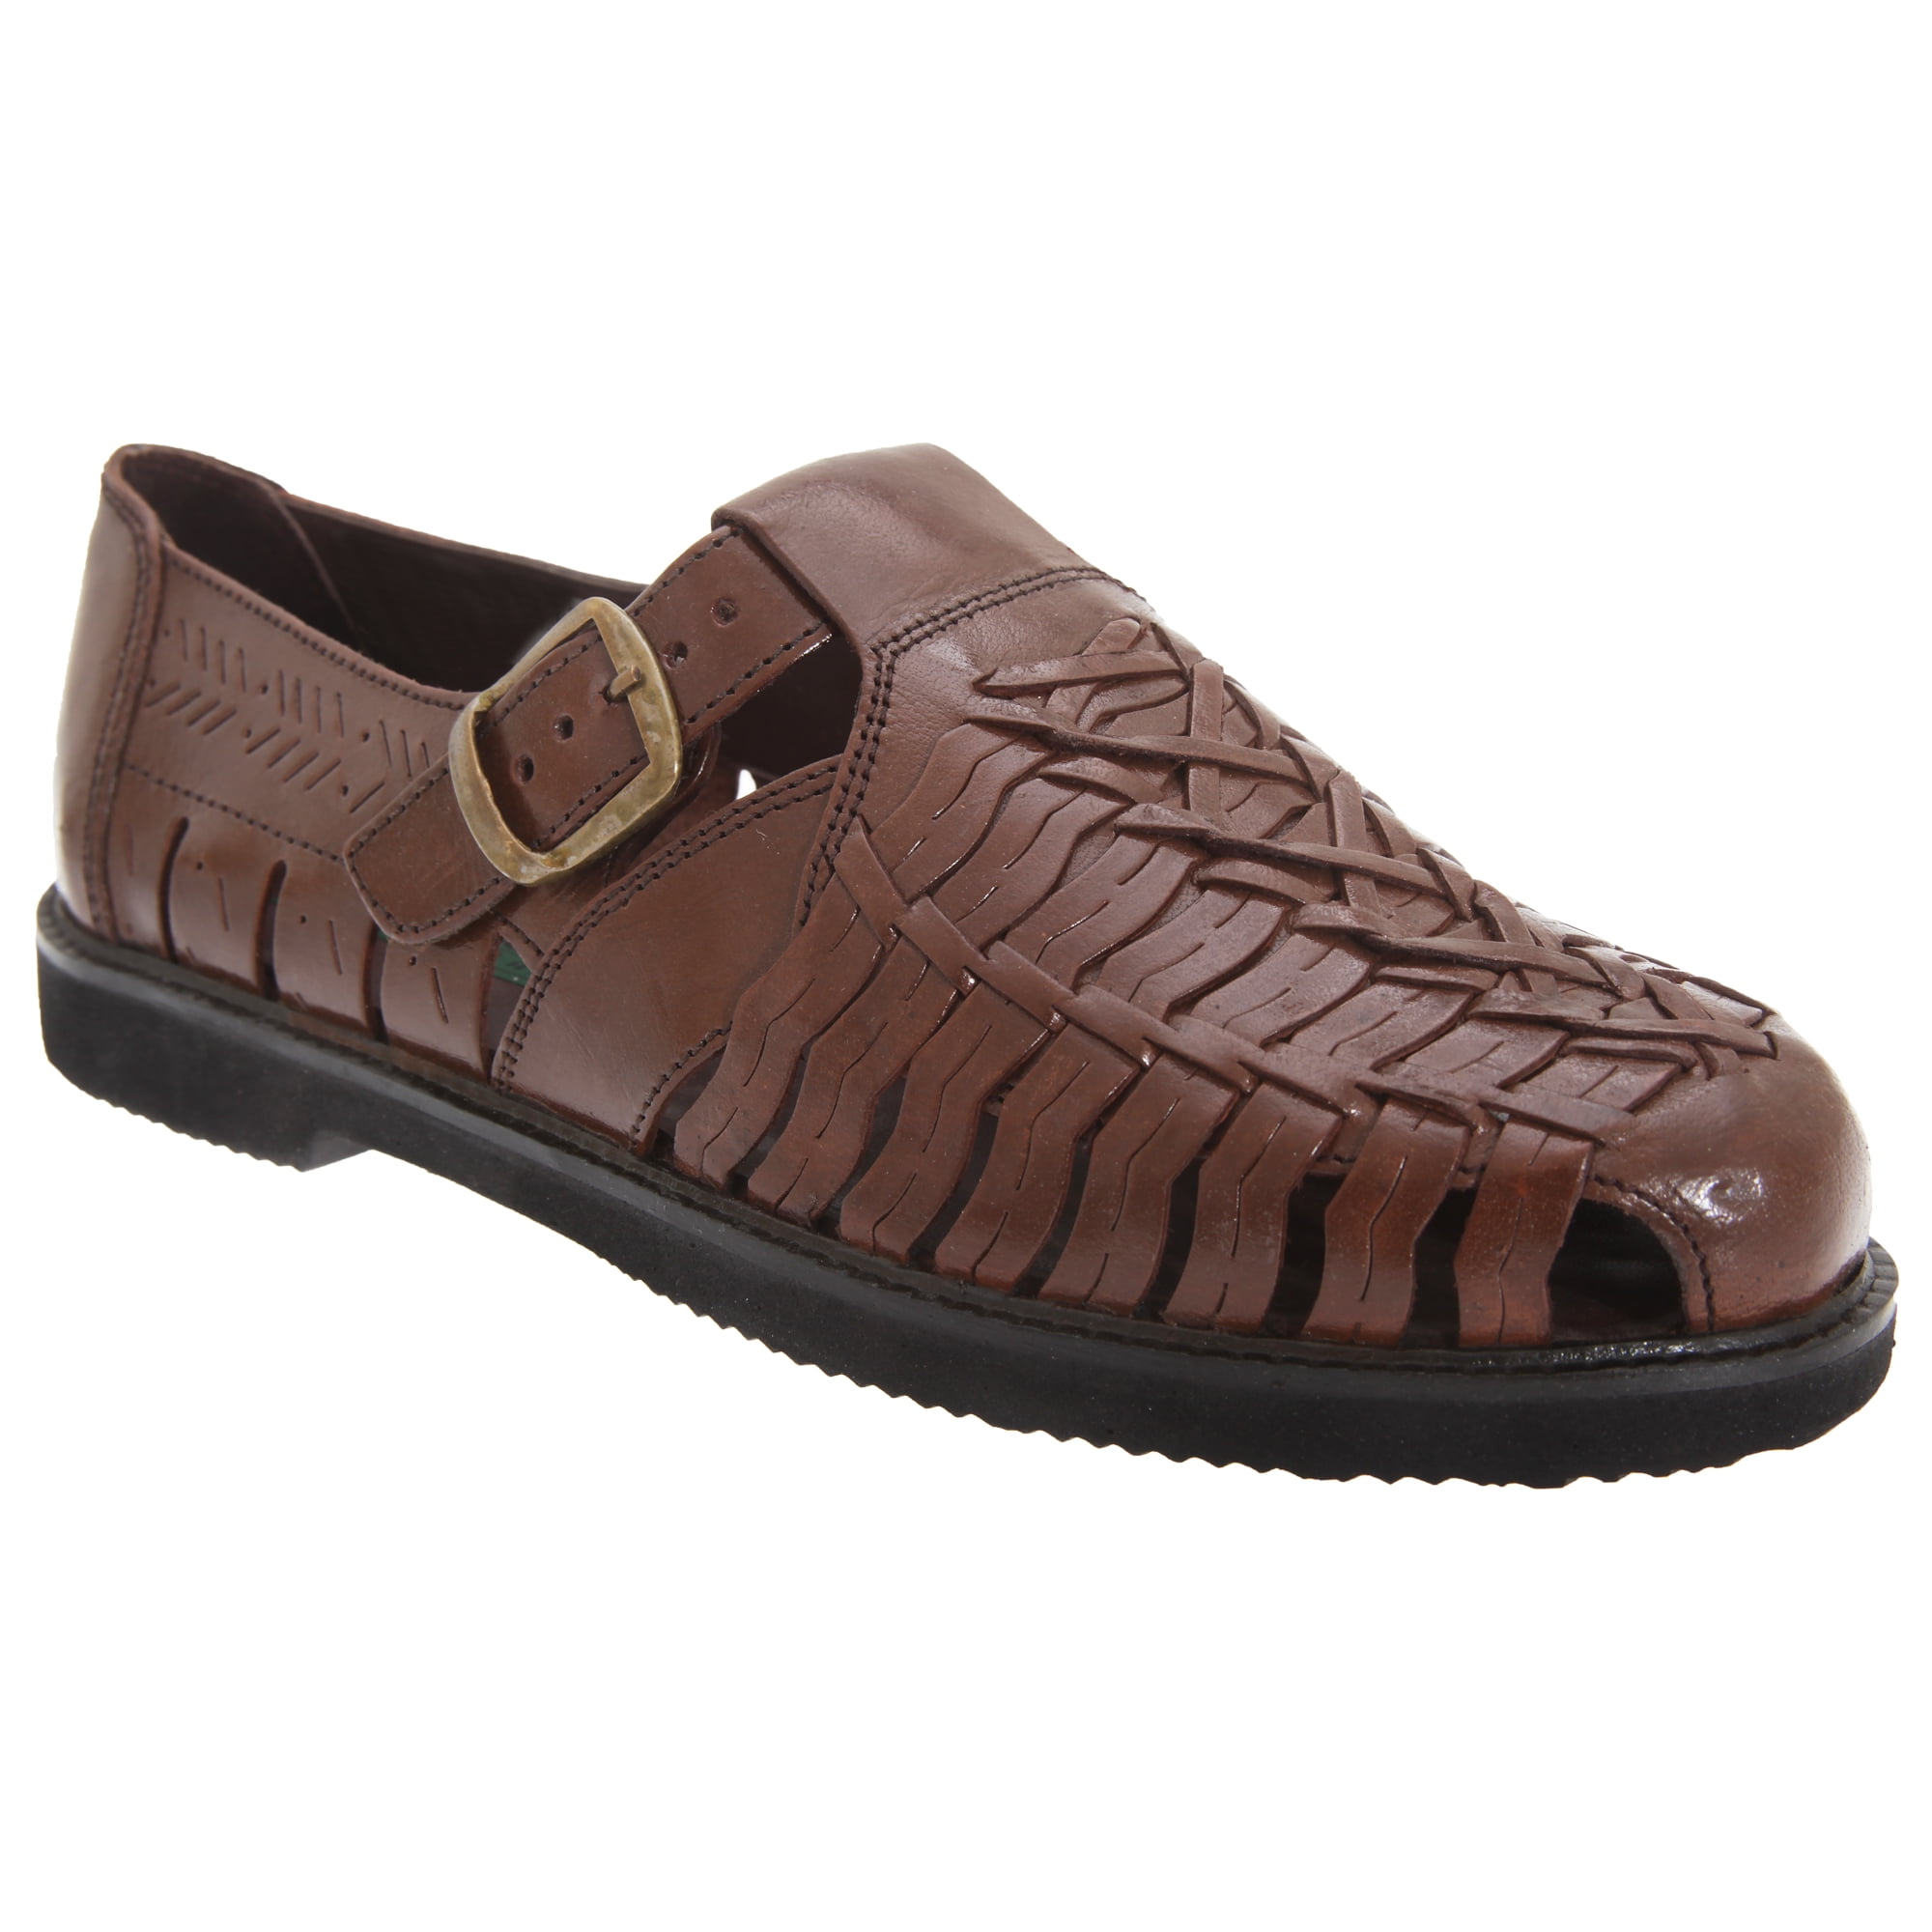 Mens Scimitar Black Brown Leather Enclosed Sandals Sizes 6 7 8 9 10 11 12 13 14 